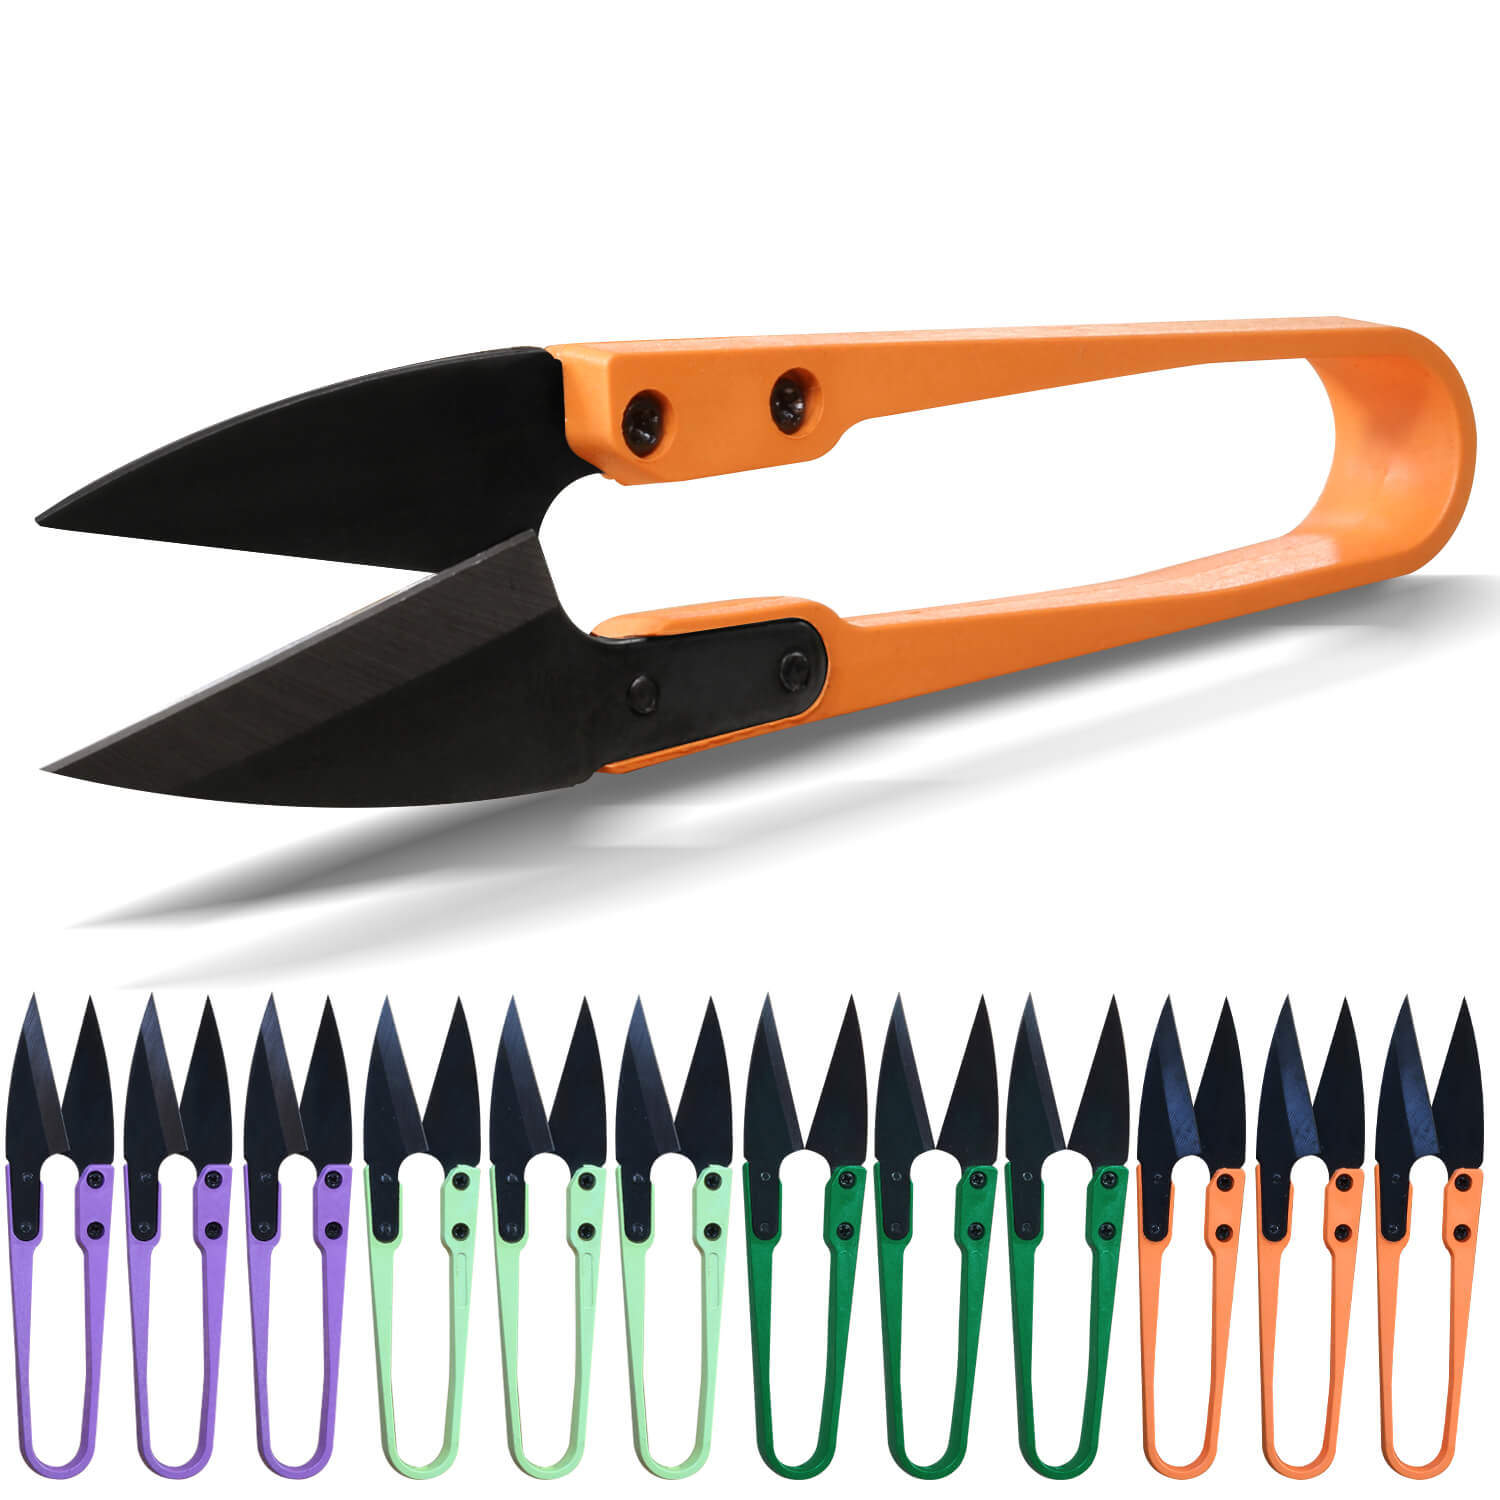 https://www.anley.com/wp-content/uploads/2020/04/4-Sewing-Scissors-Set-2.jpg